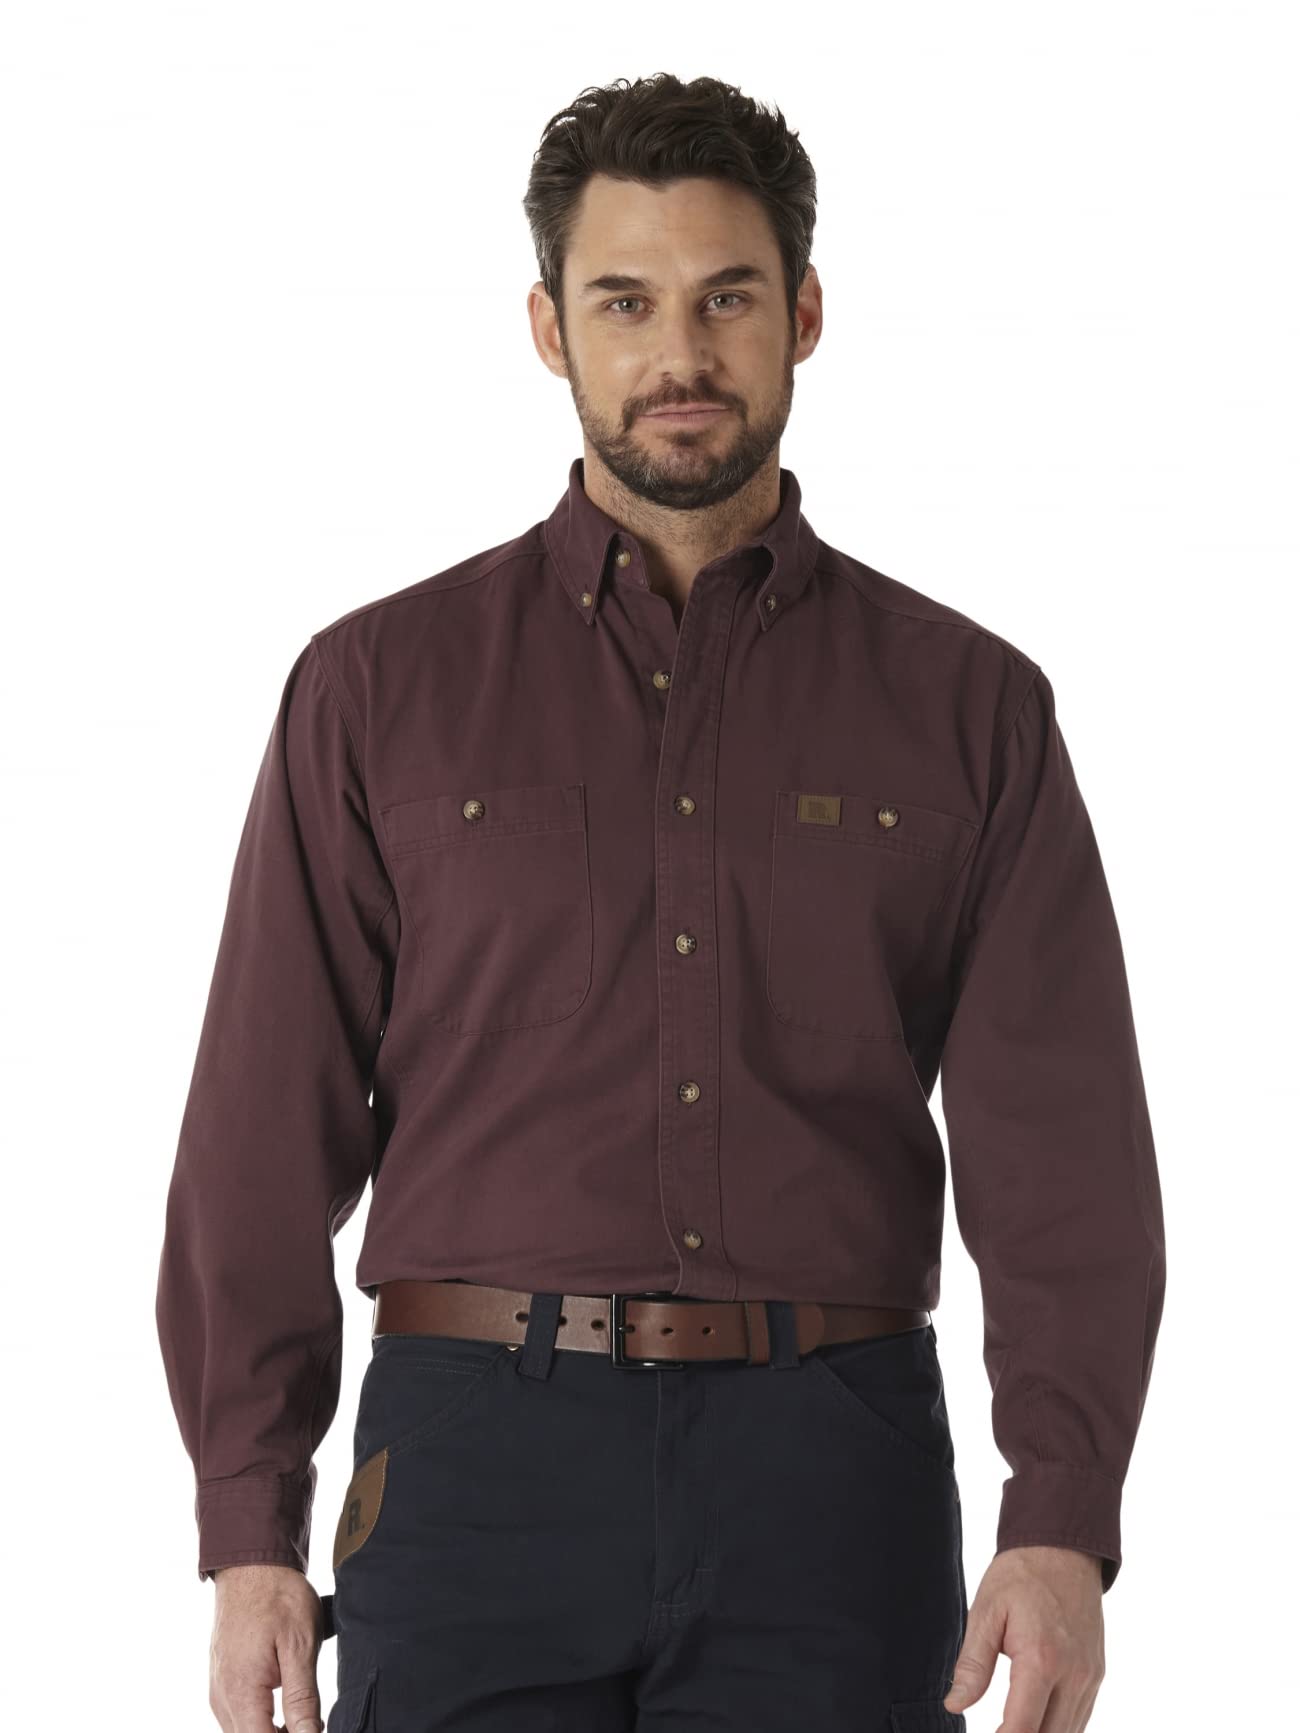 Wrangler Riggs Workwear Men's Logger Twill Long Sleeve Workshirt